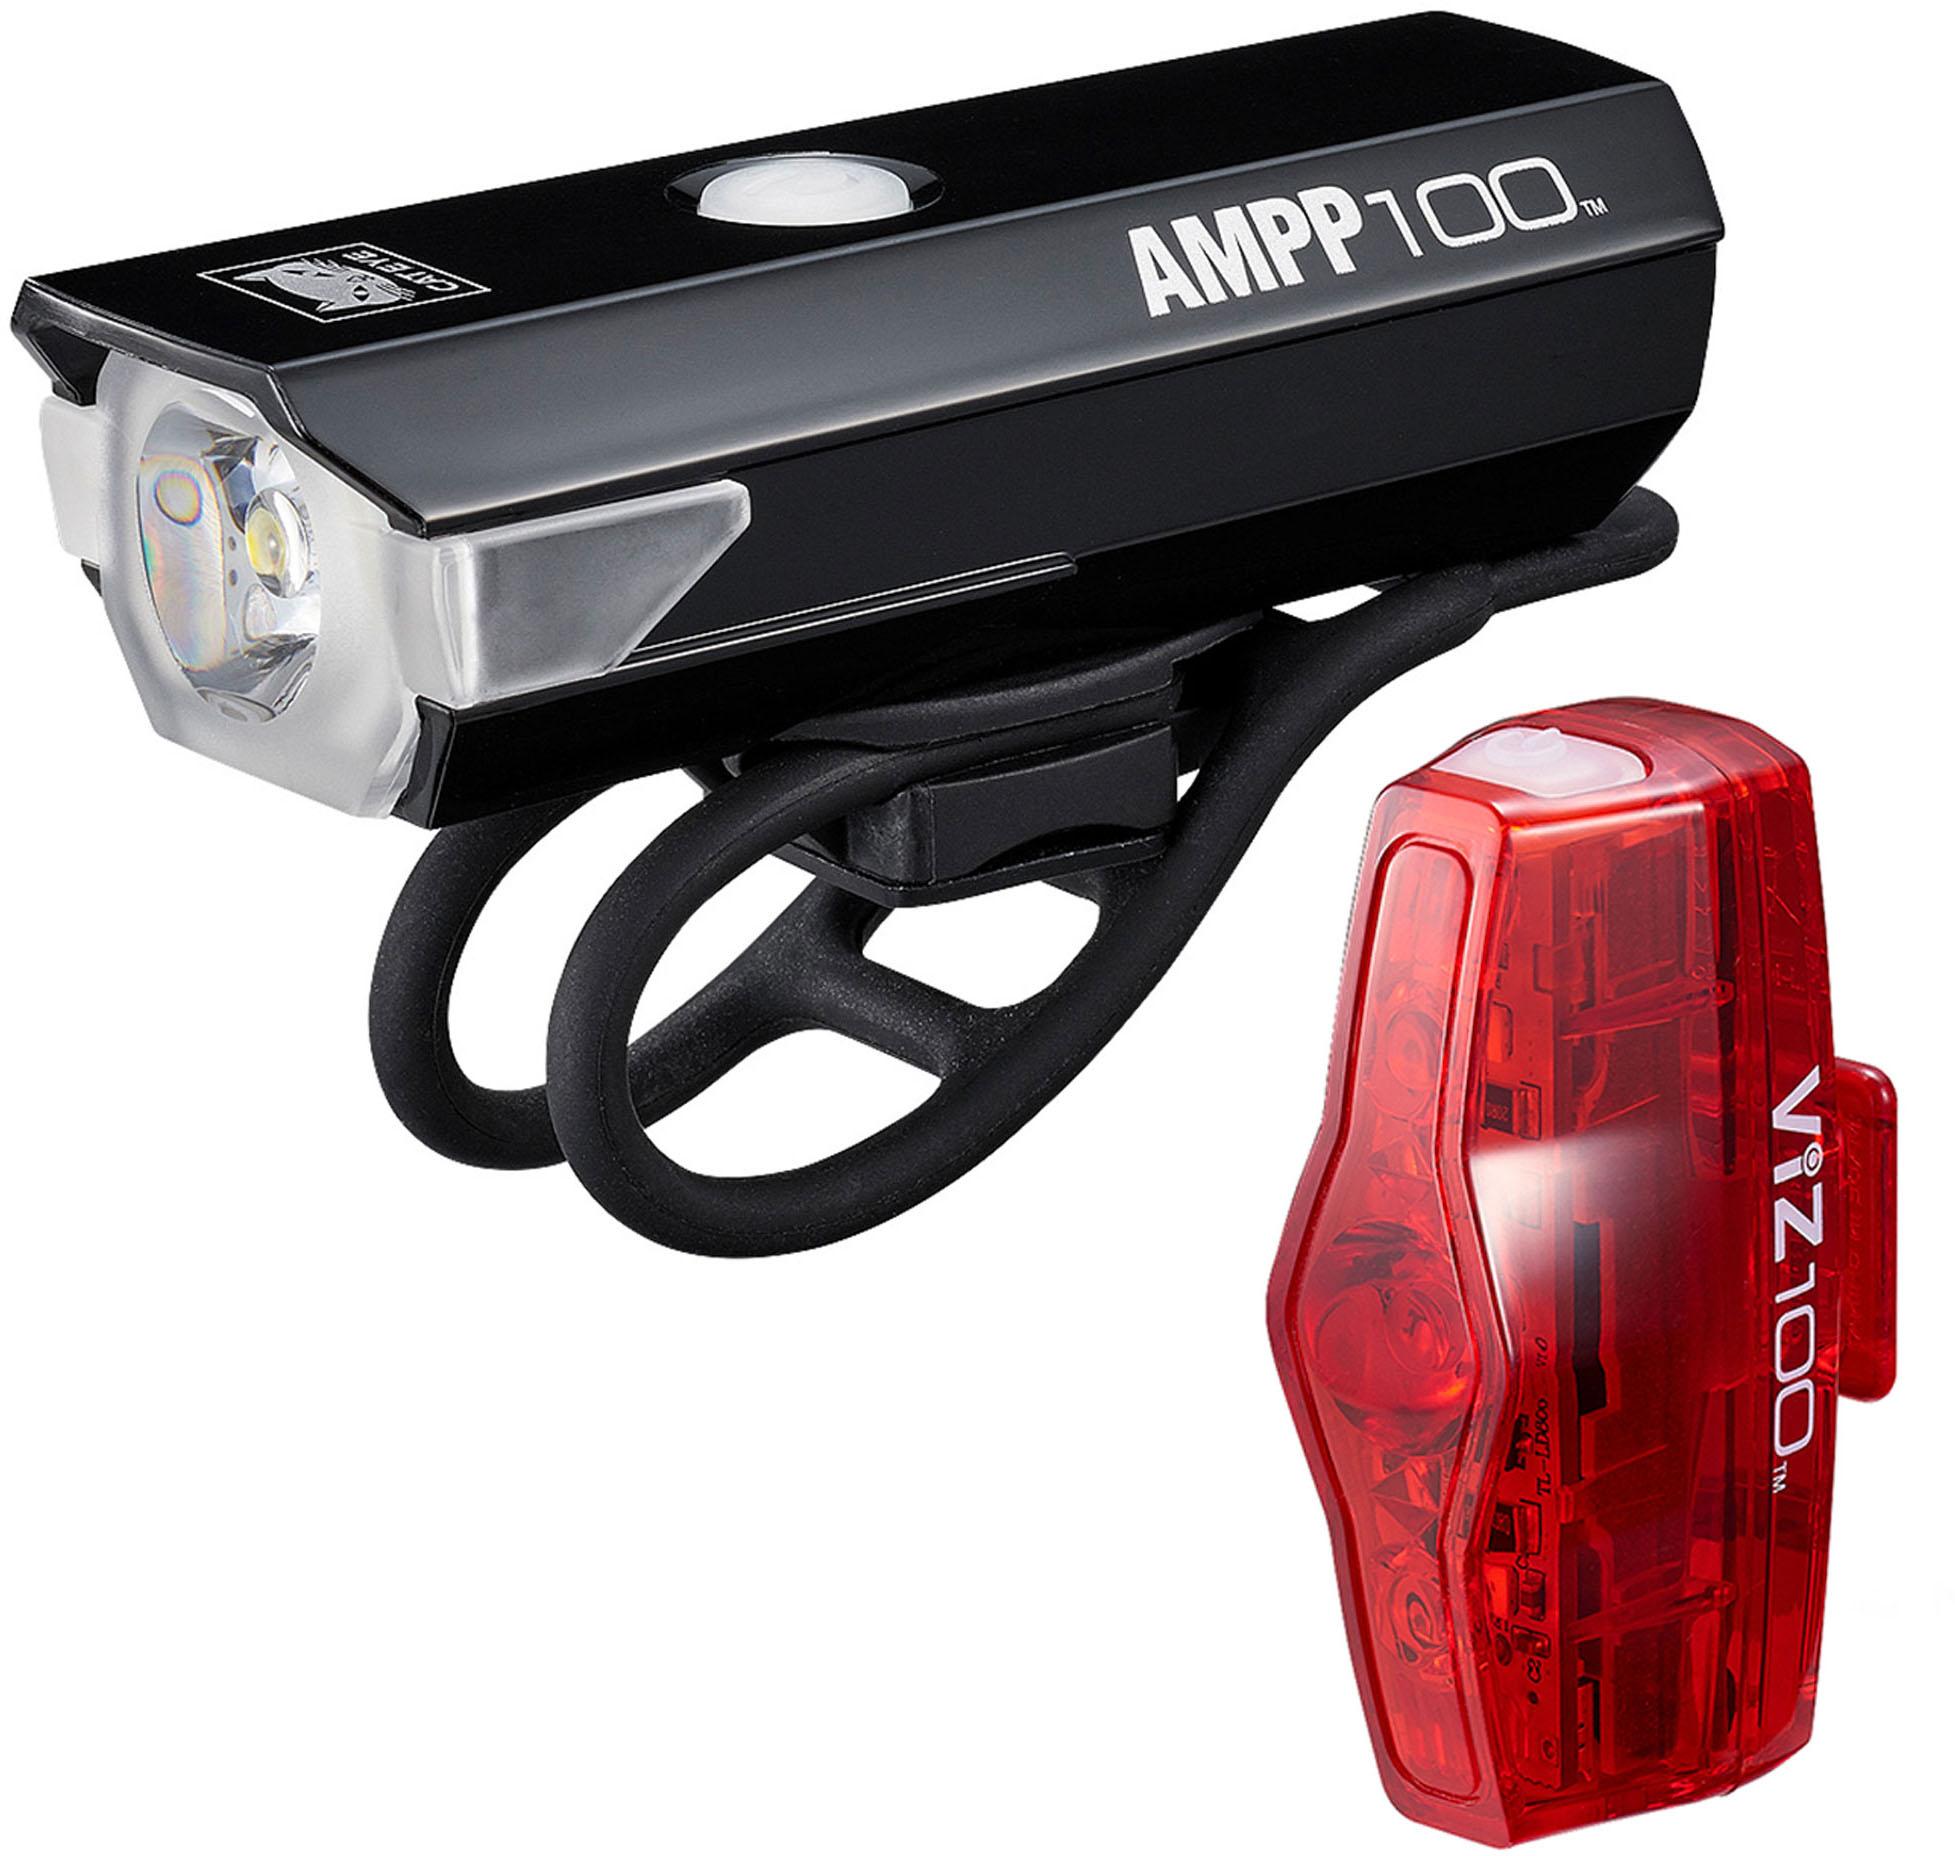 Cateye Ampp 100 And Viz 100 Light Set - Black/red